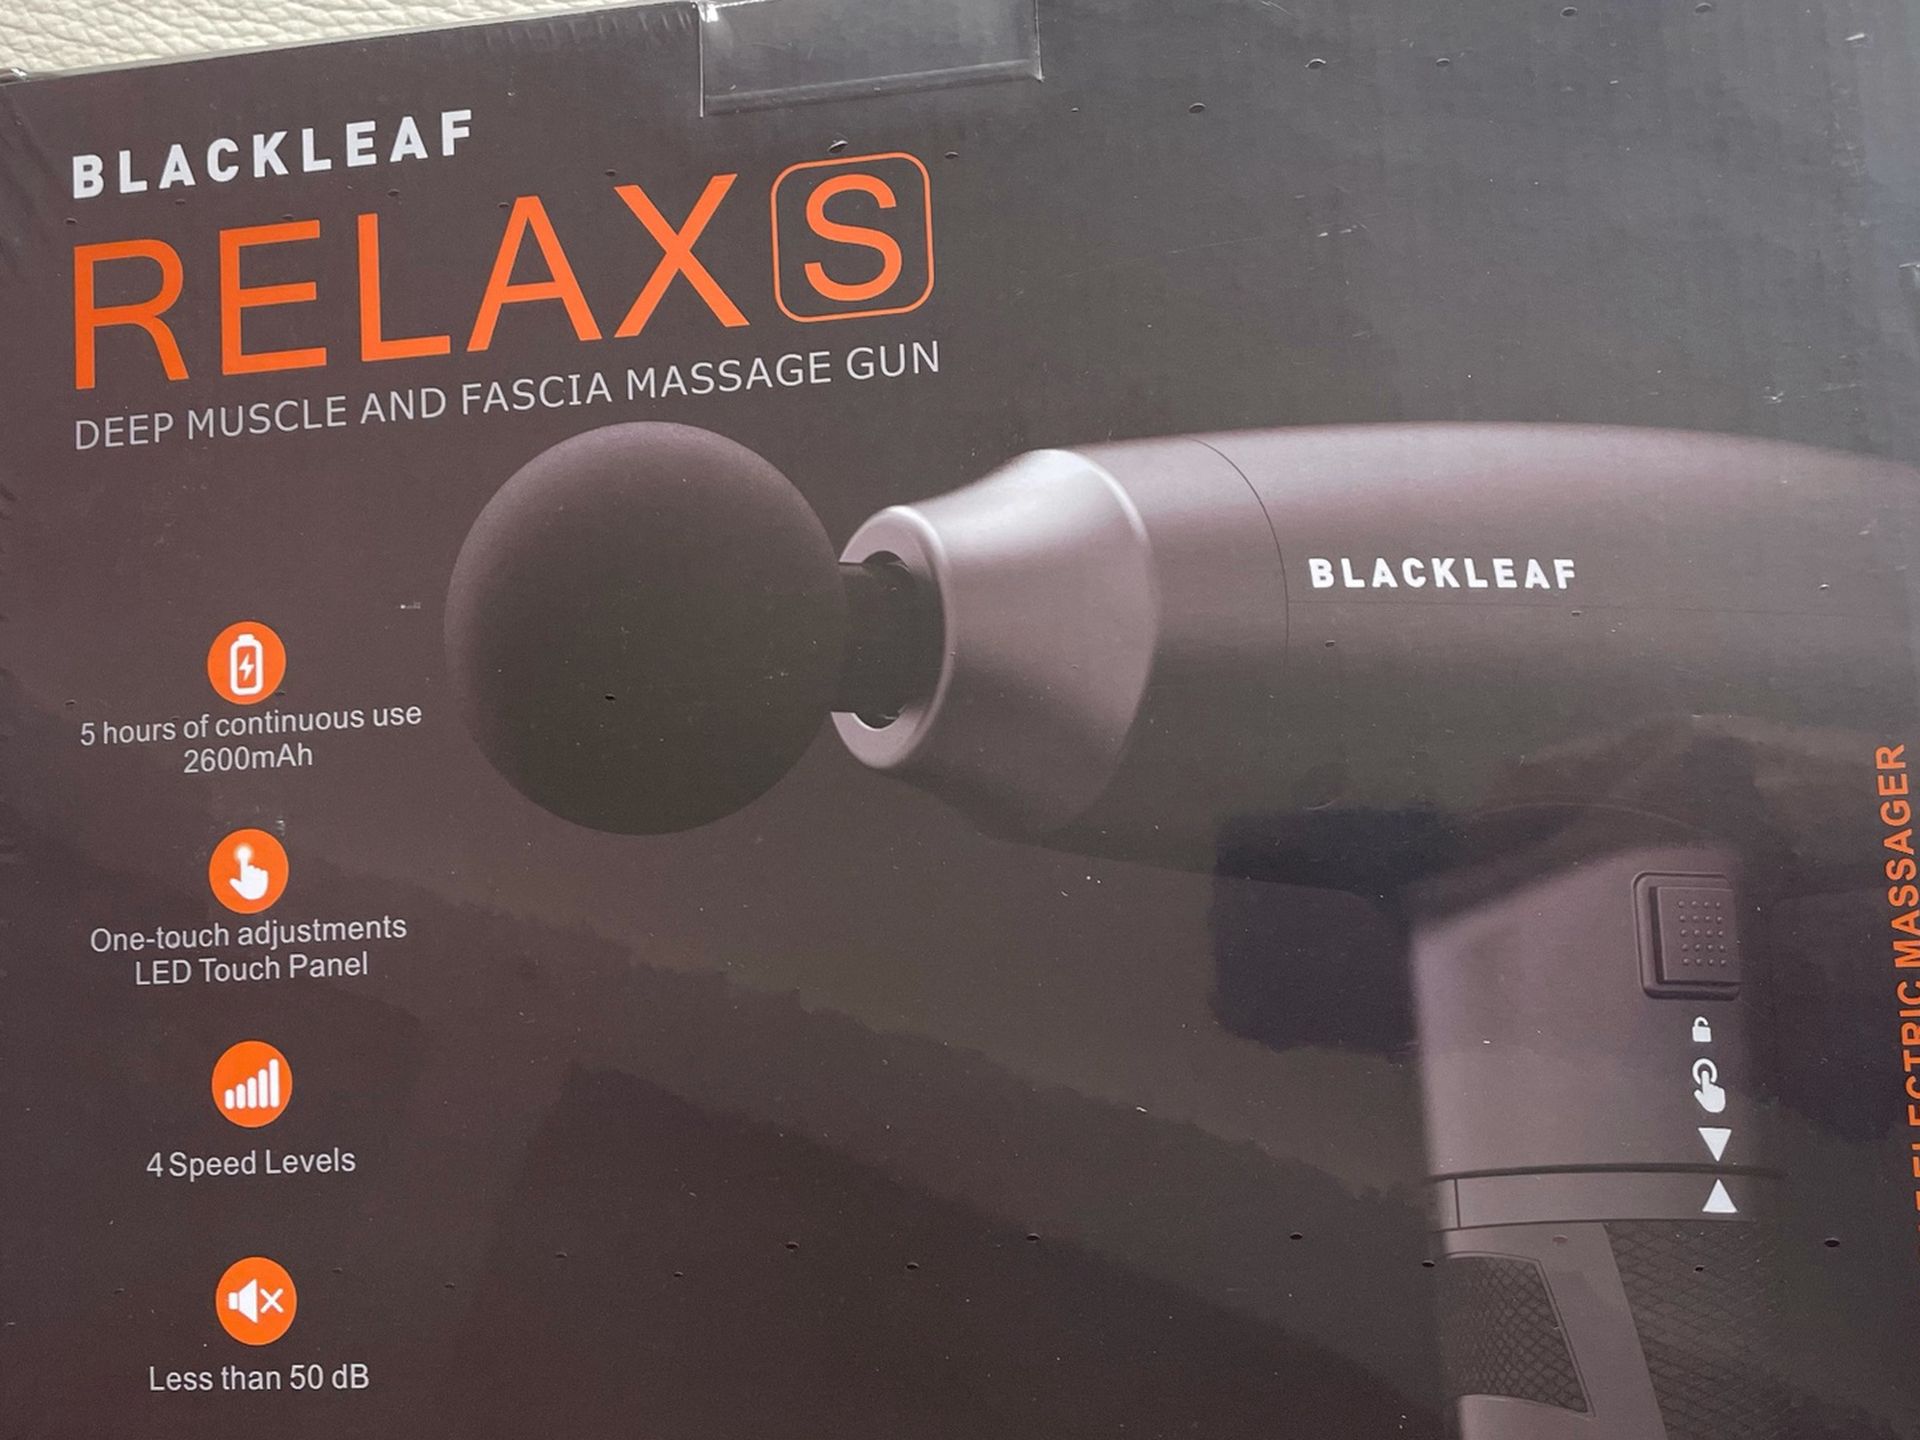 Blackleaf Relax S deep tissue percussion massage gun